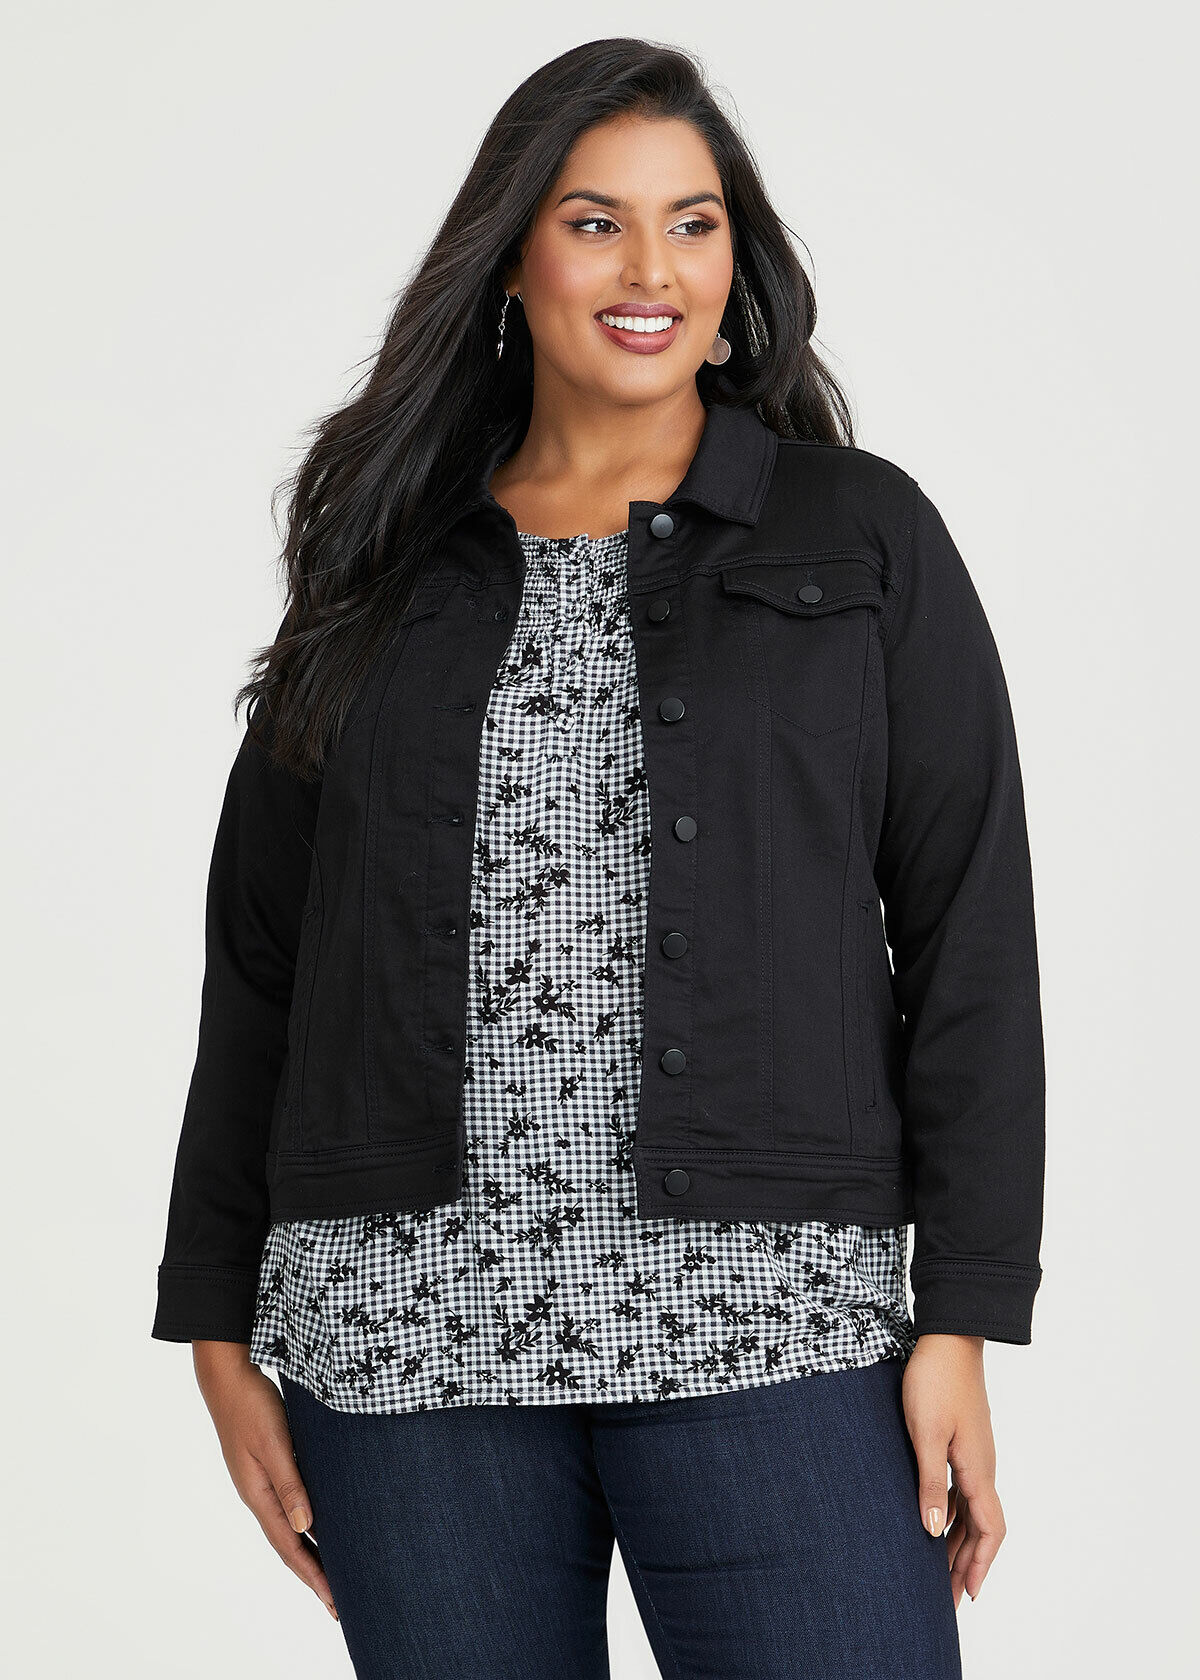 Womens Jackets for Fall Women's Plus Size Casual Color Block Plush  Sweatshirt | eBay